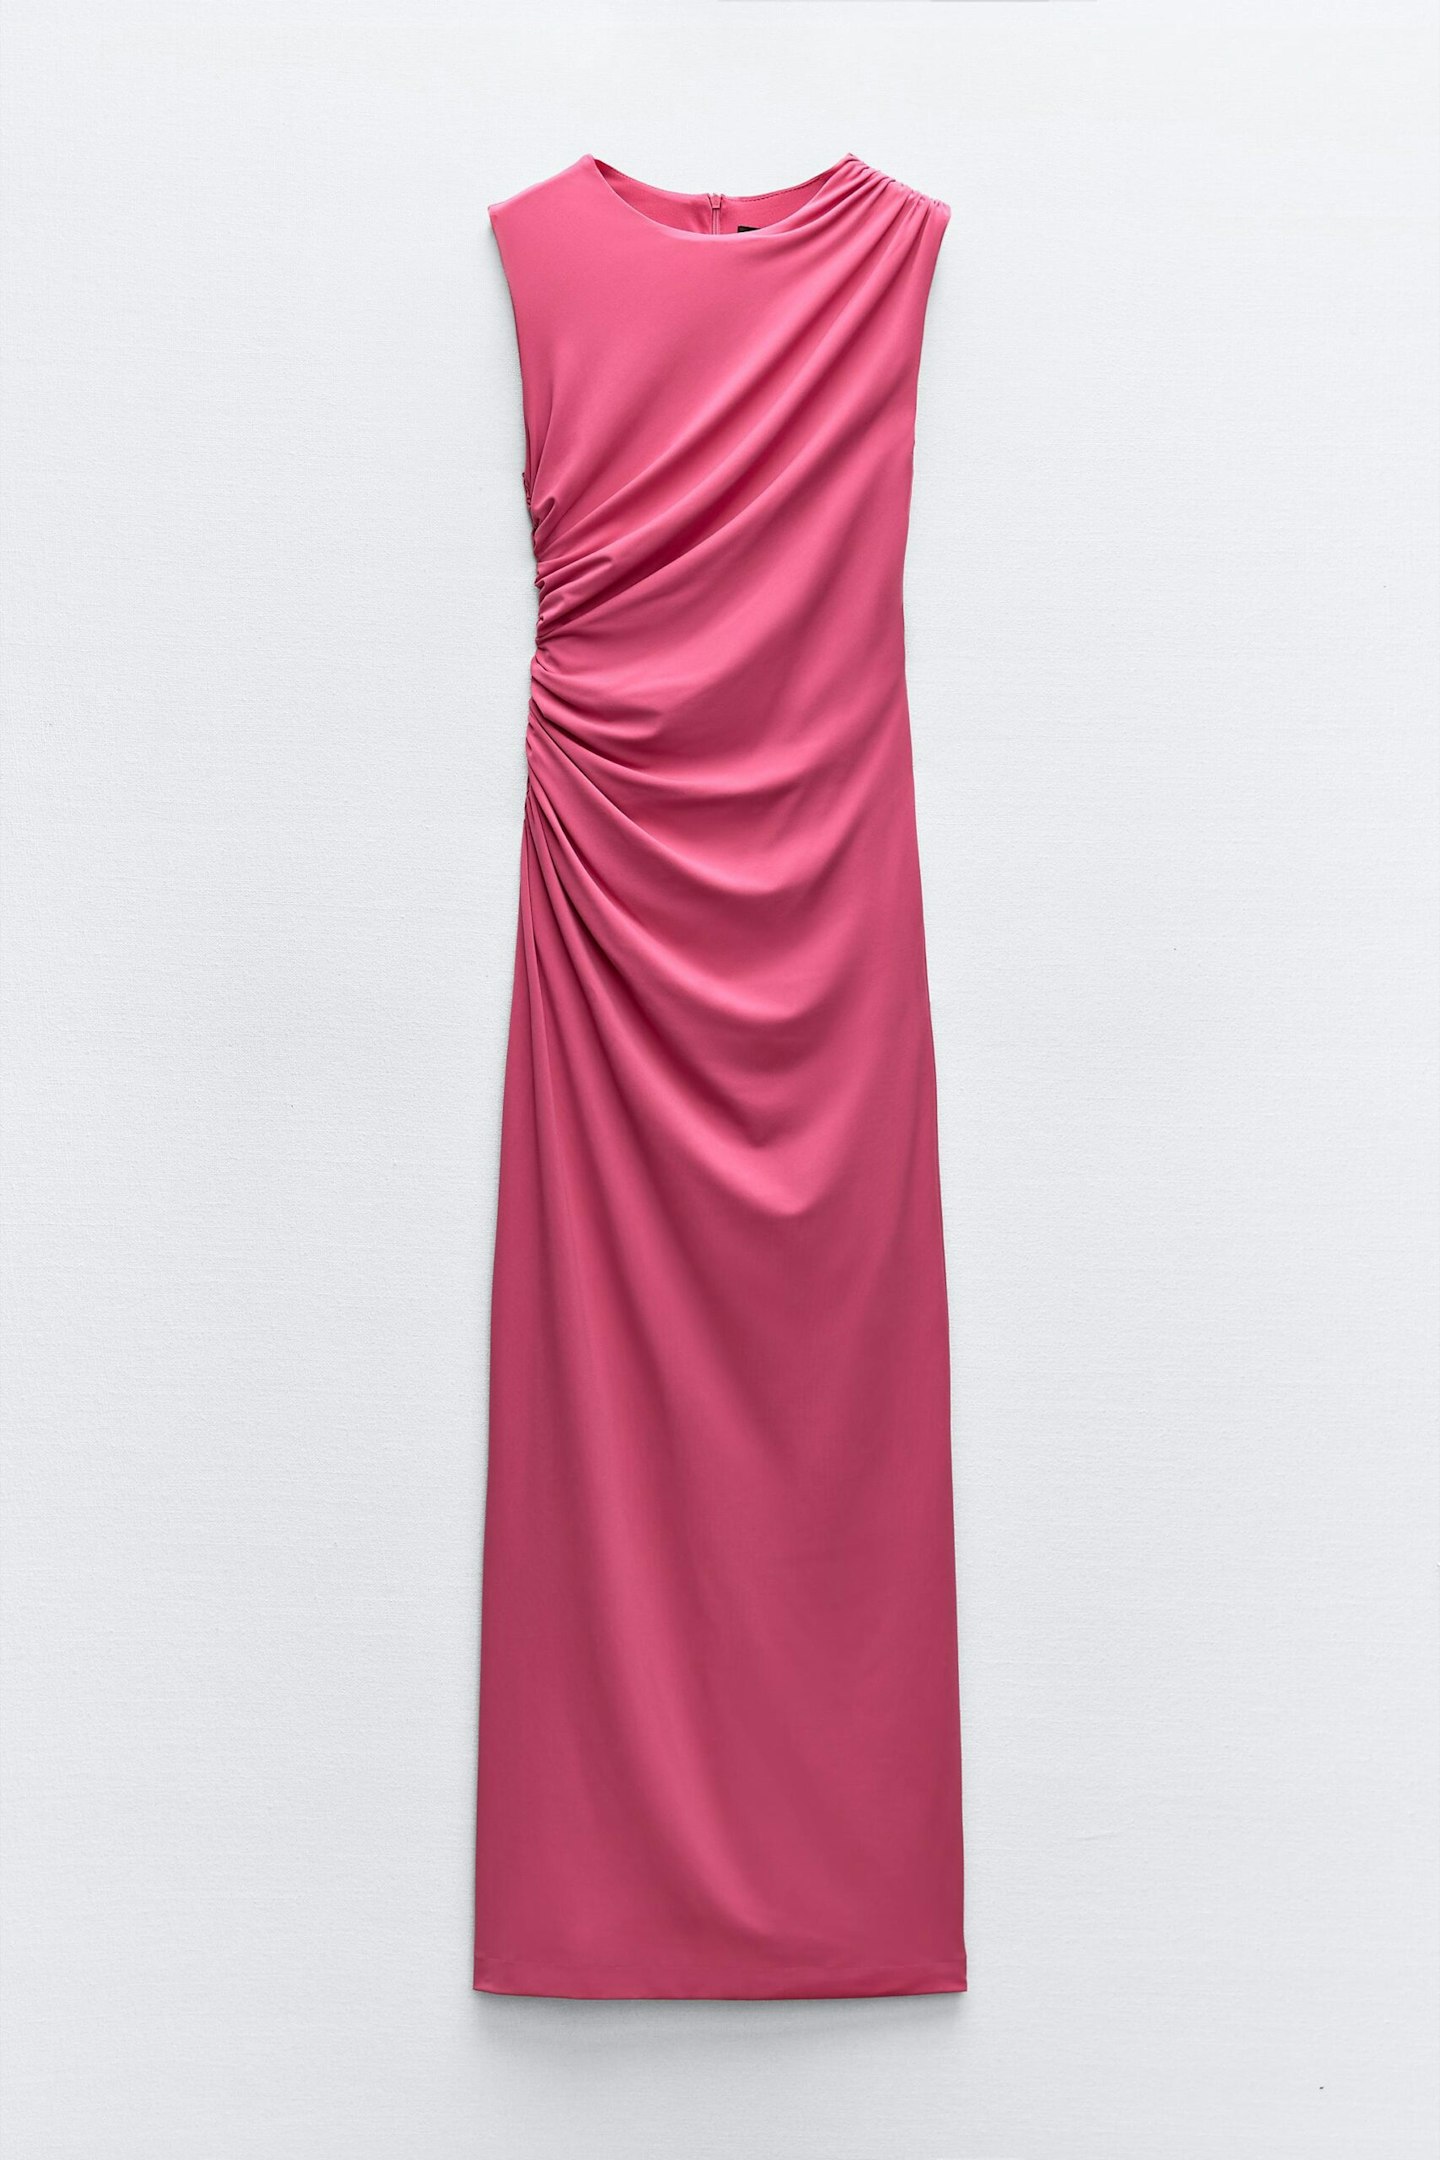 Zara Draped Midi Dress